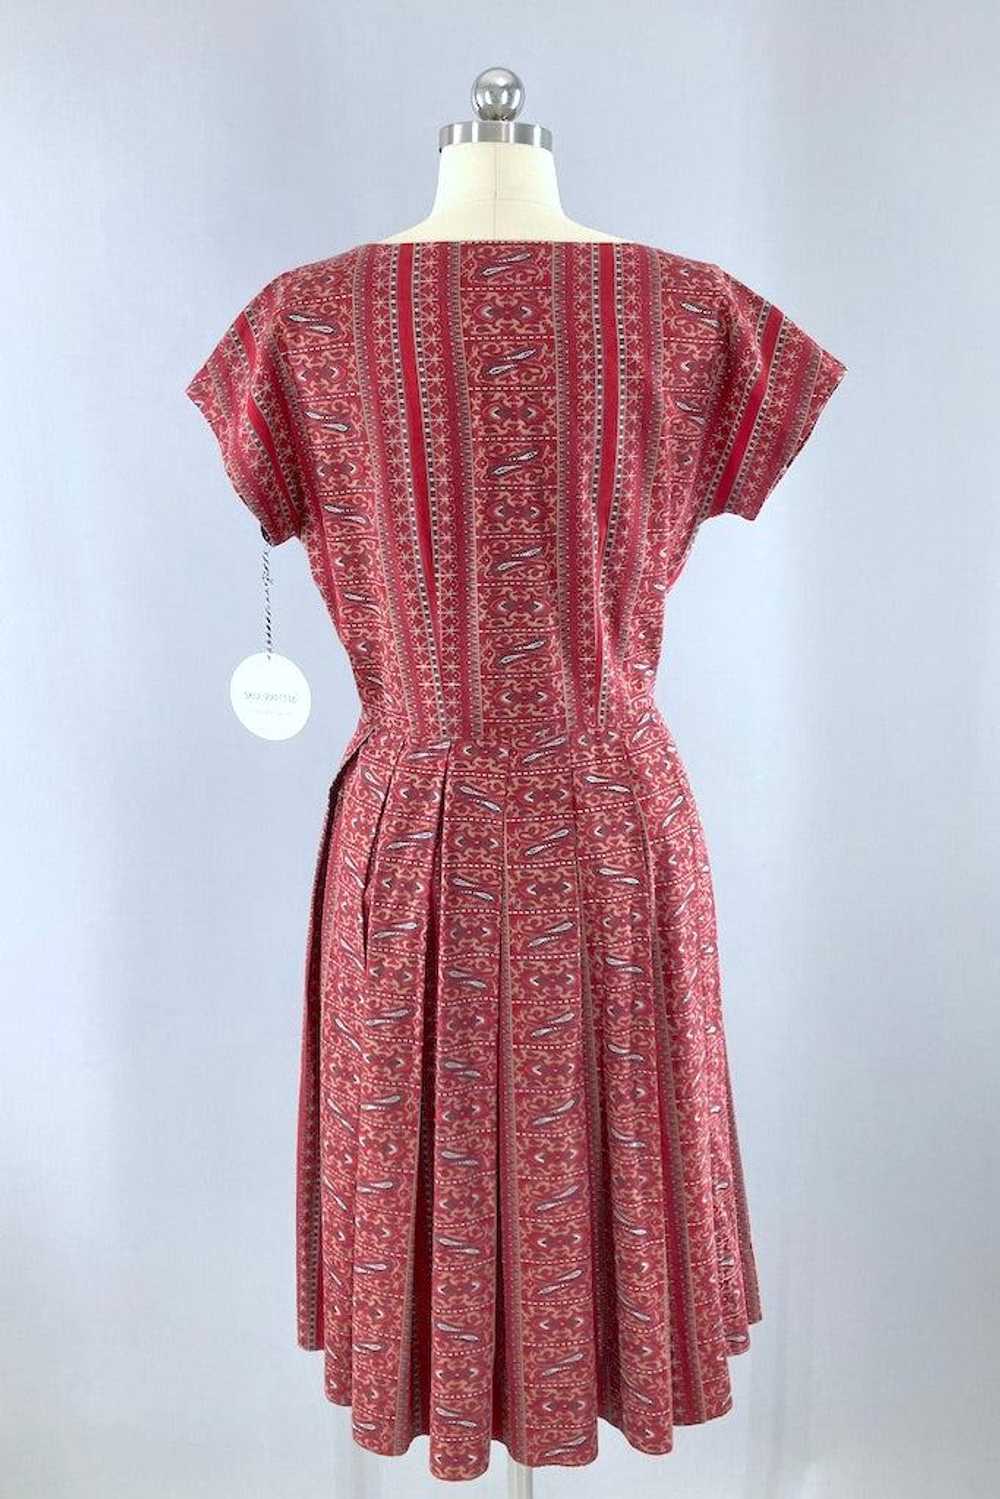 Vintage 1950s Cotton Day Dress - image 6